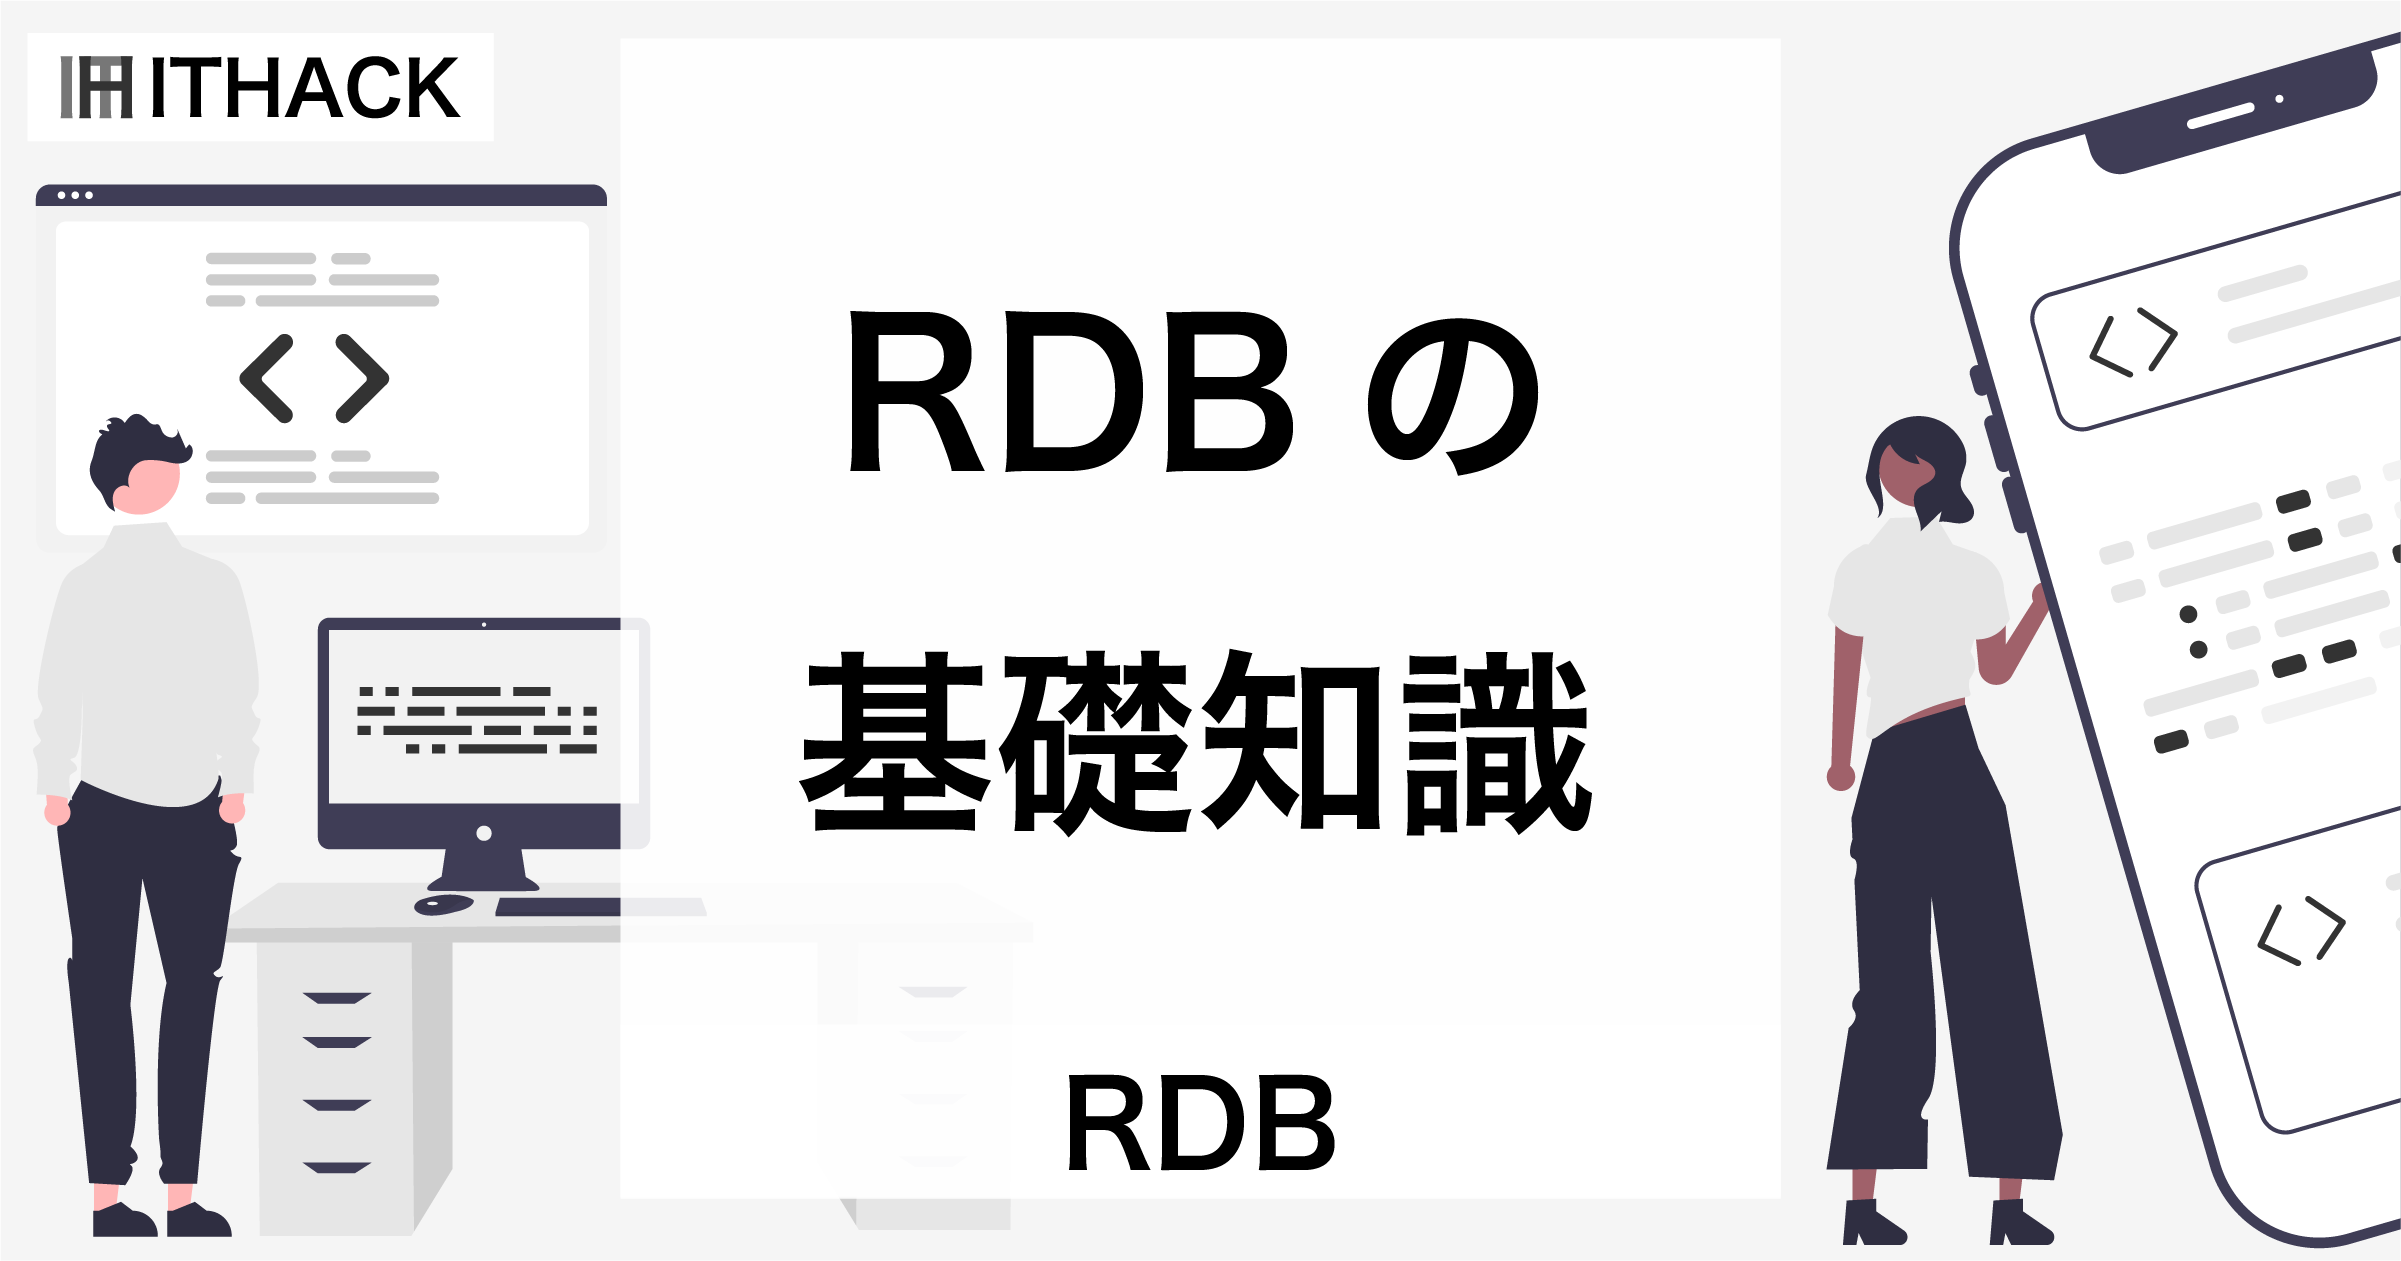 【RDB】リレーショナルデータベース - 表形式のデータベース